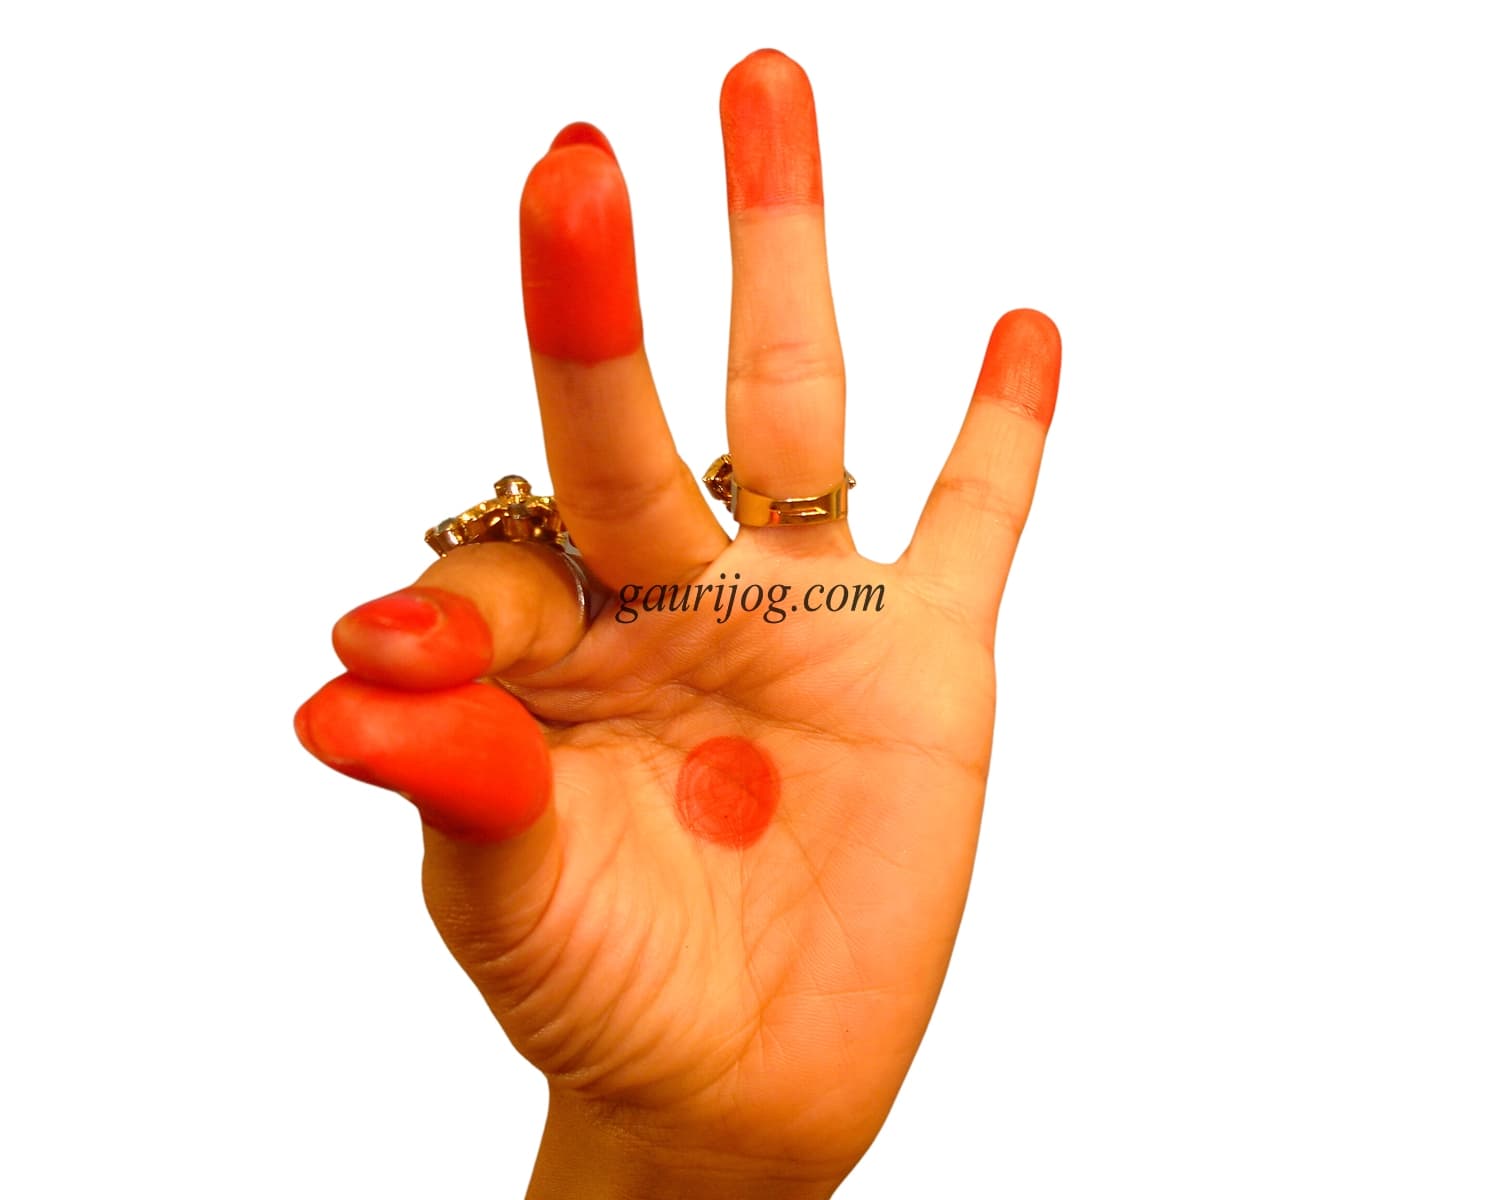 Hausasyya Hand Gesture by Gauri Jog